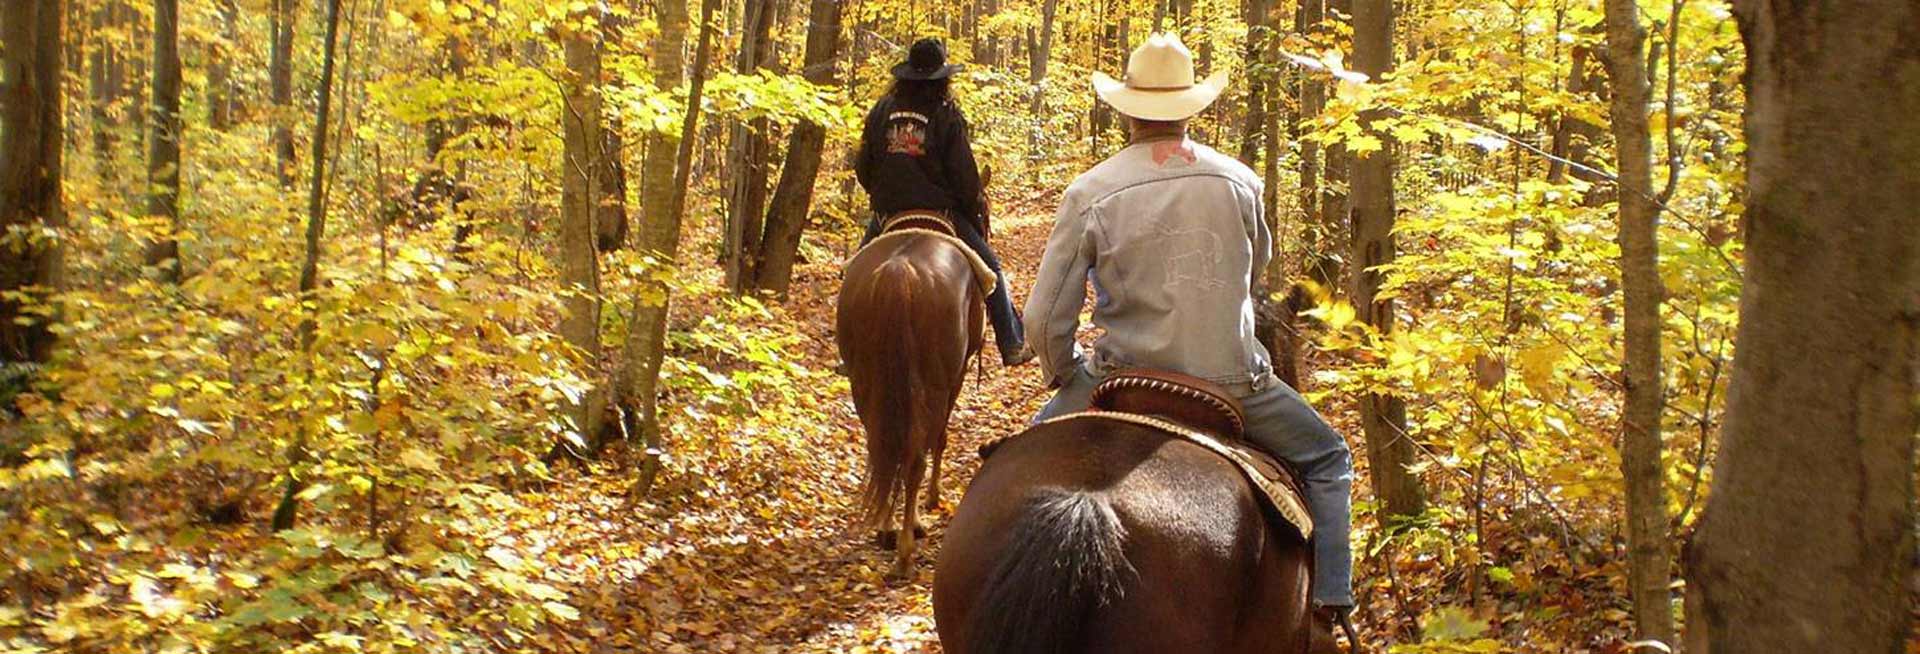 Group on autumn horseback trail ride.